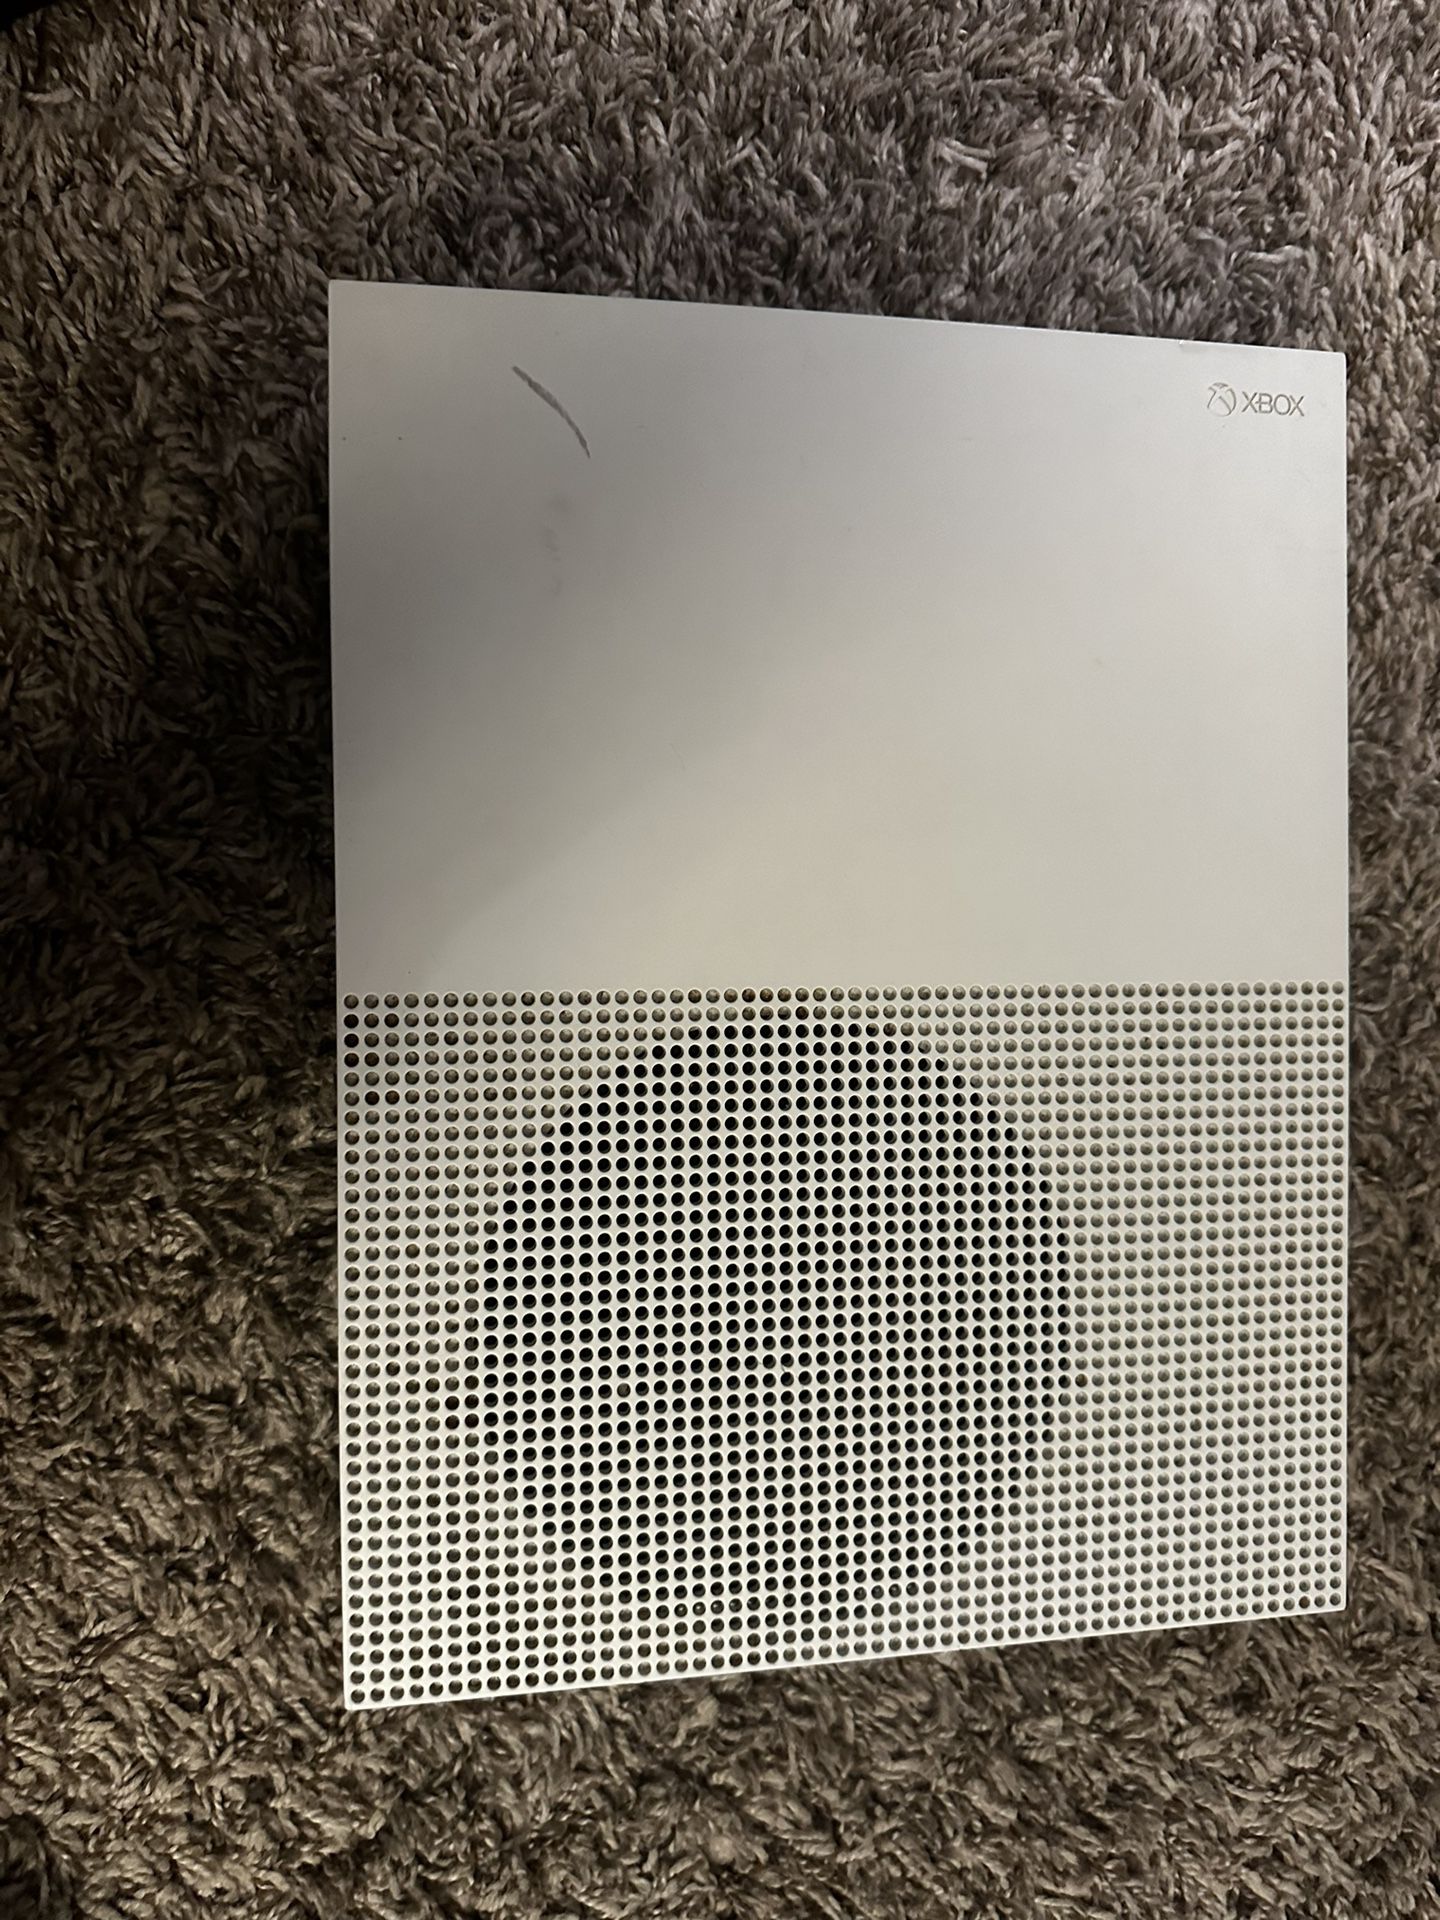 A White Xbox One S